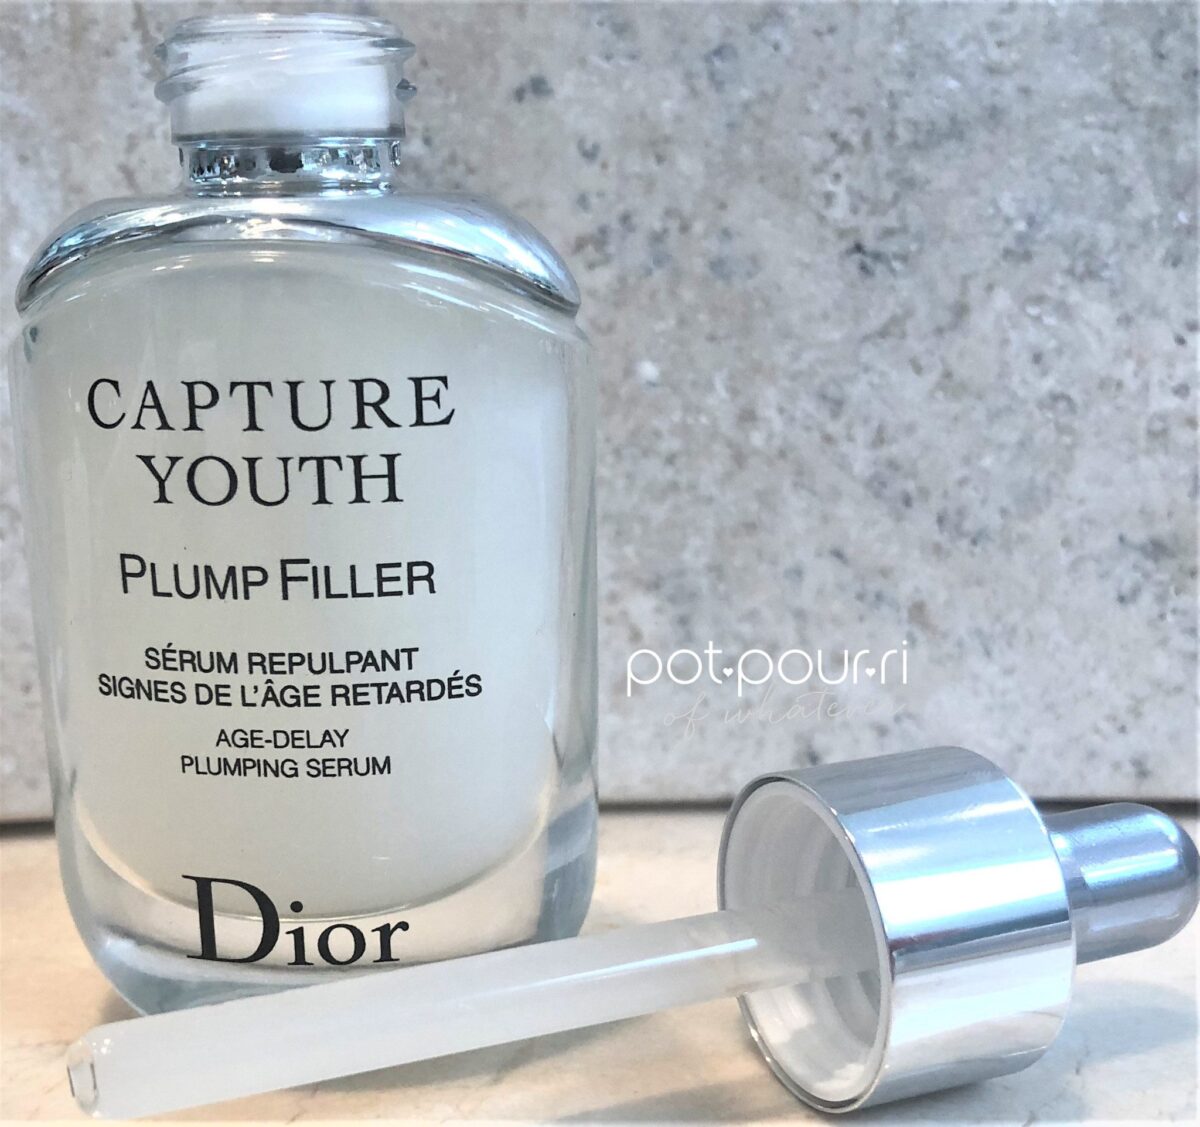 Dior Capture Youth Plump Filler\u0026Glow 